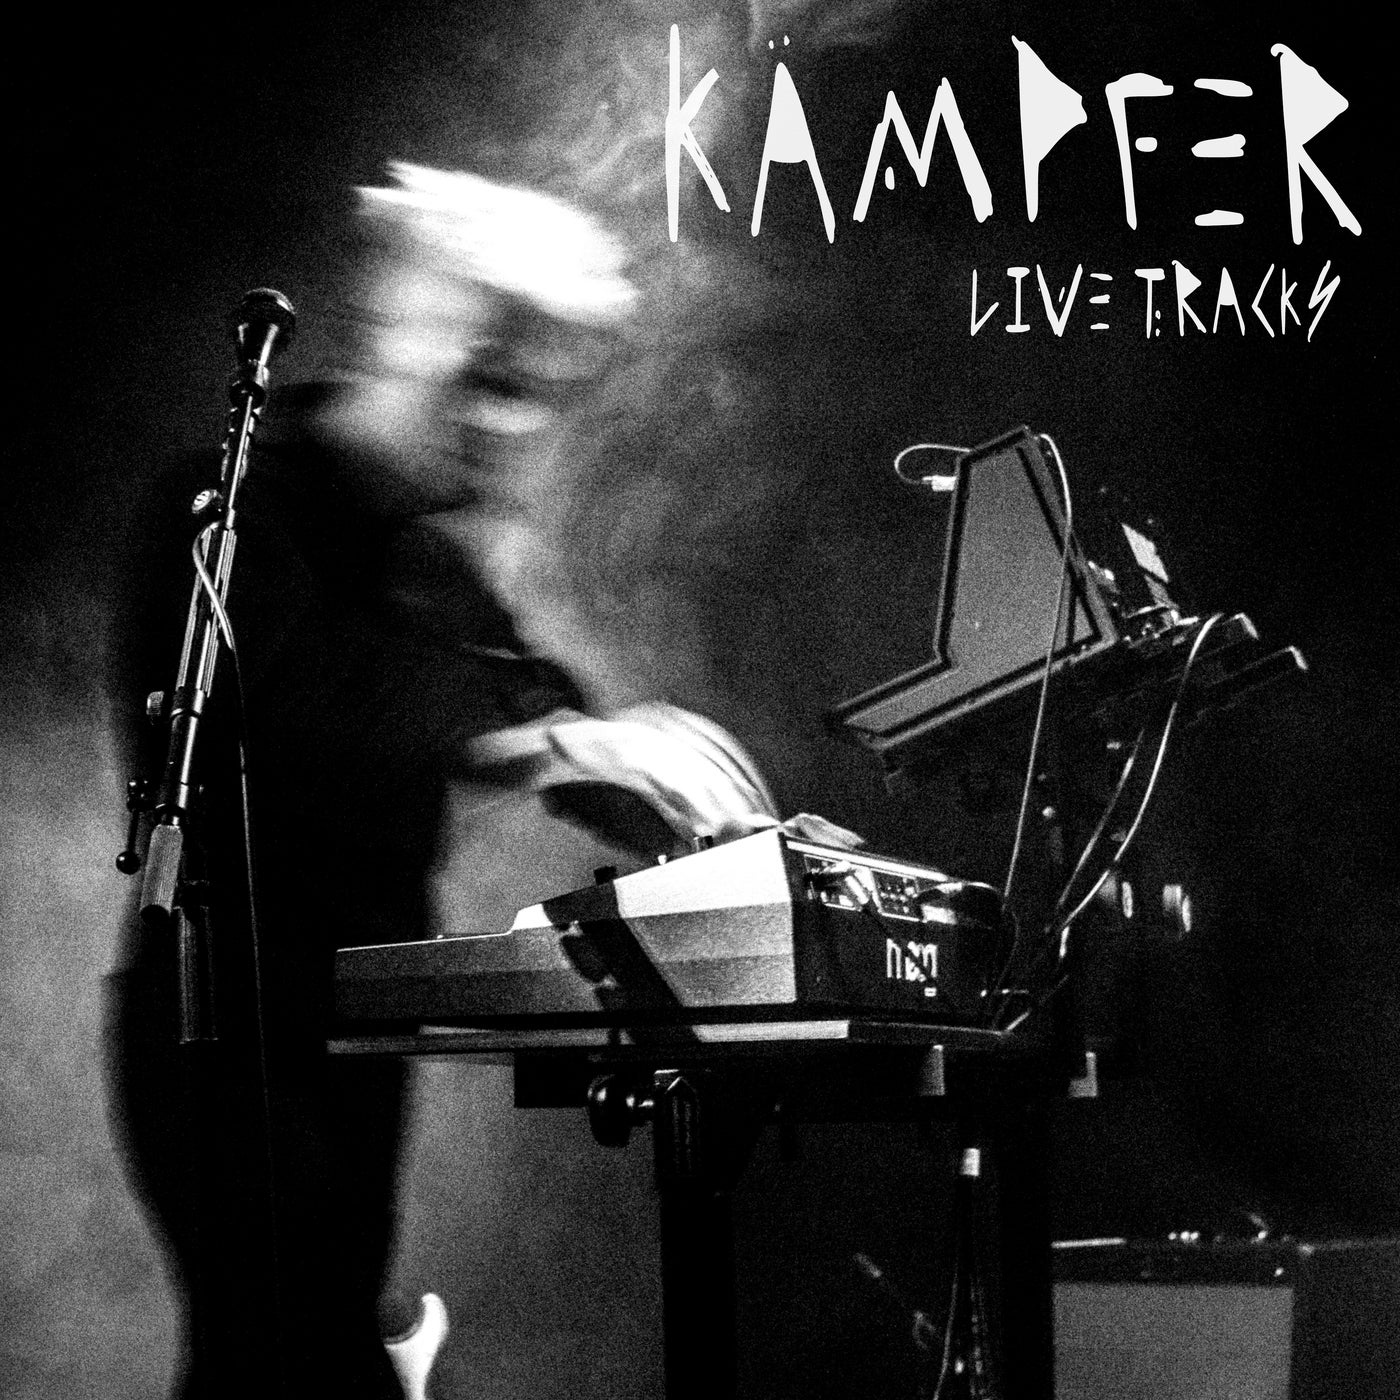 Kämpfer Live tracks - LIve